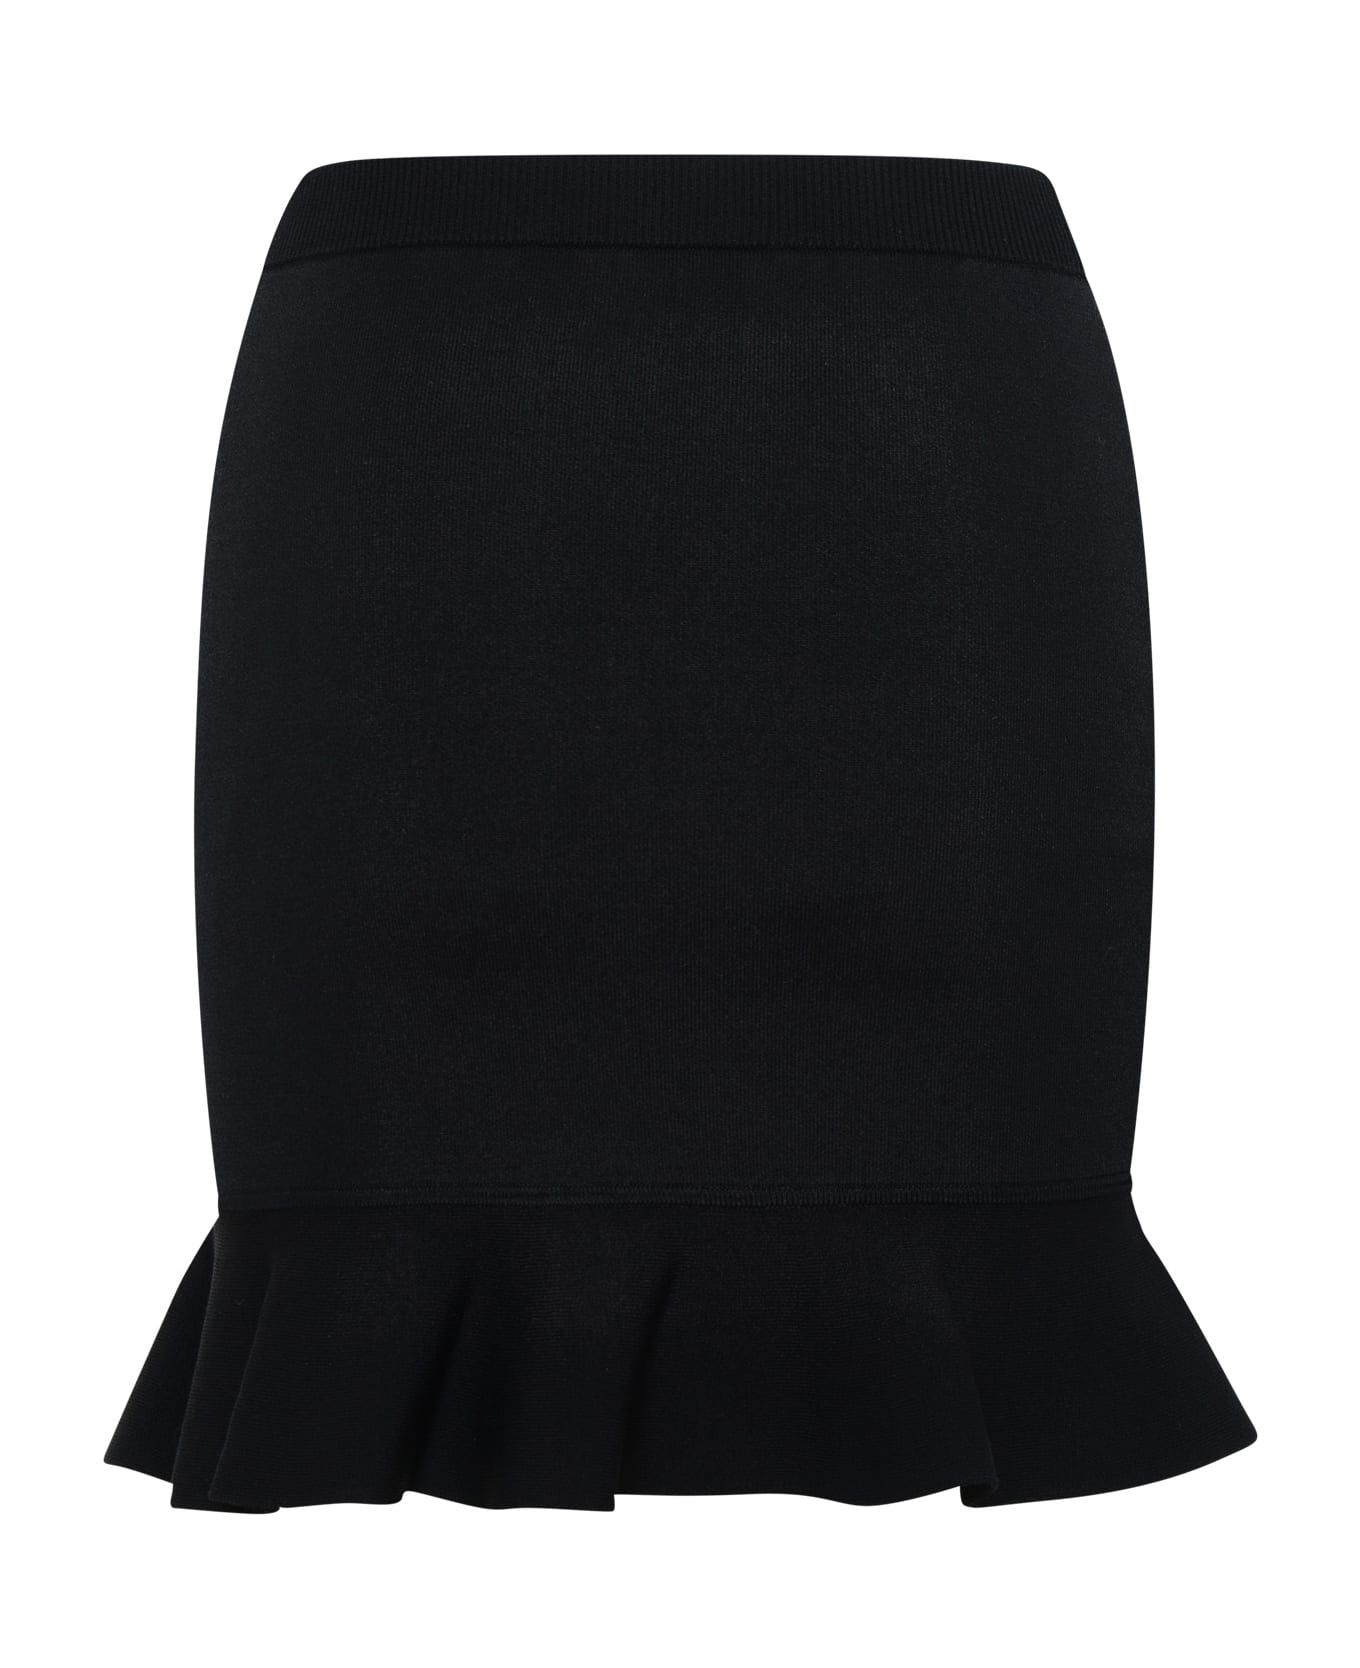 J.W. Anderson Black Viscose Blend Skirt - Black